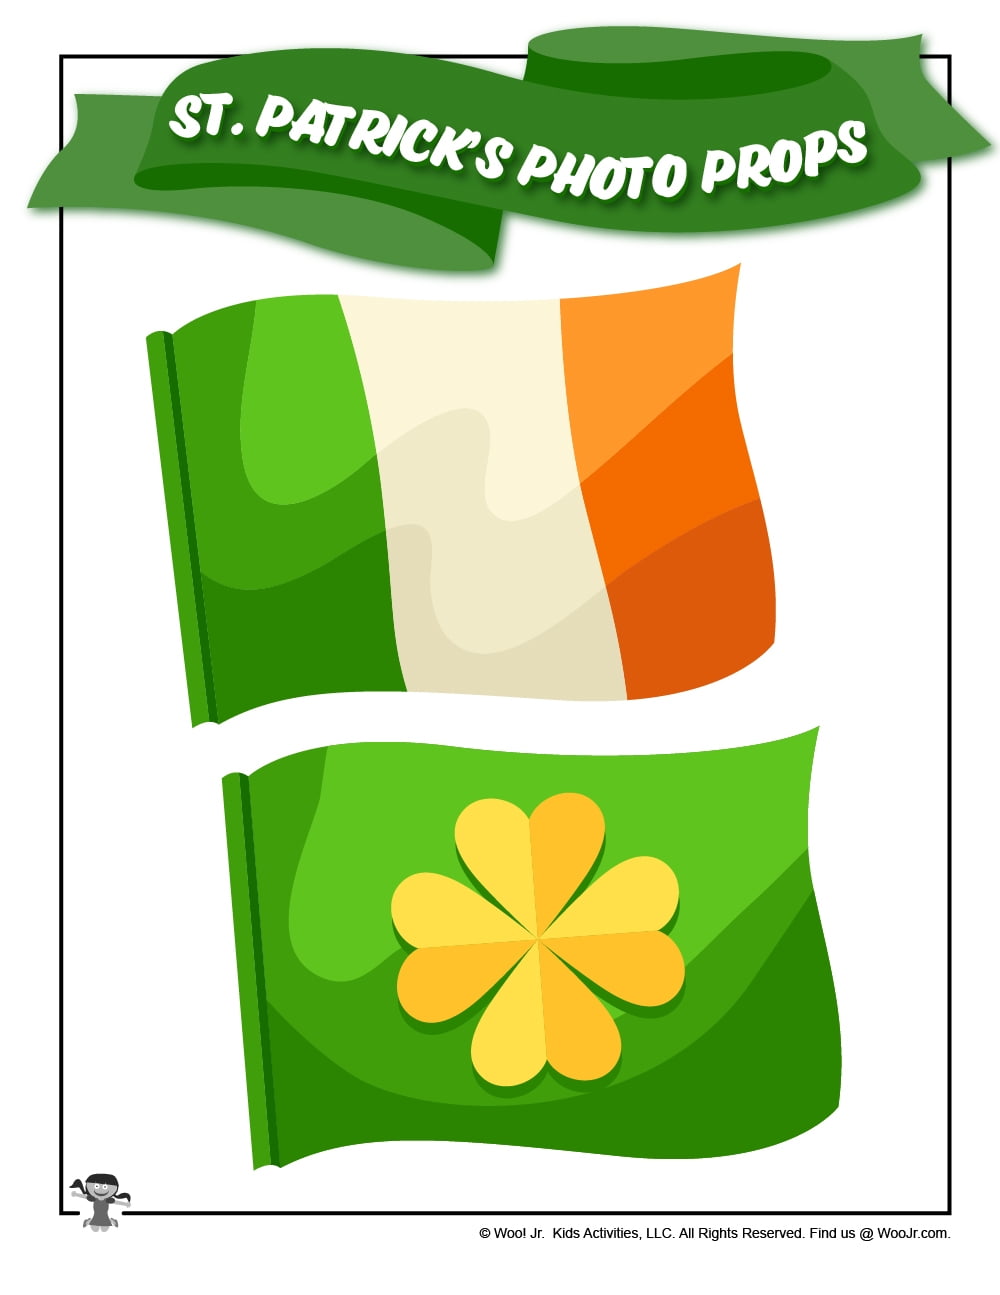 Printable Irish Flag